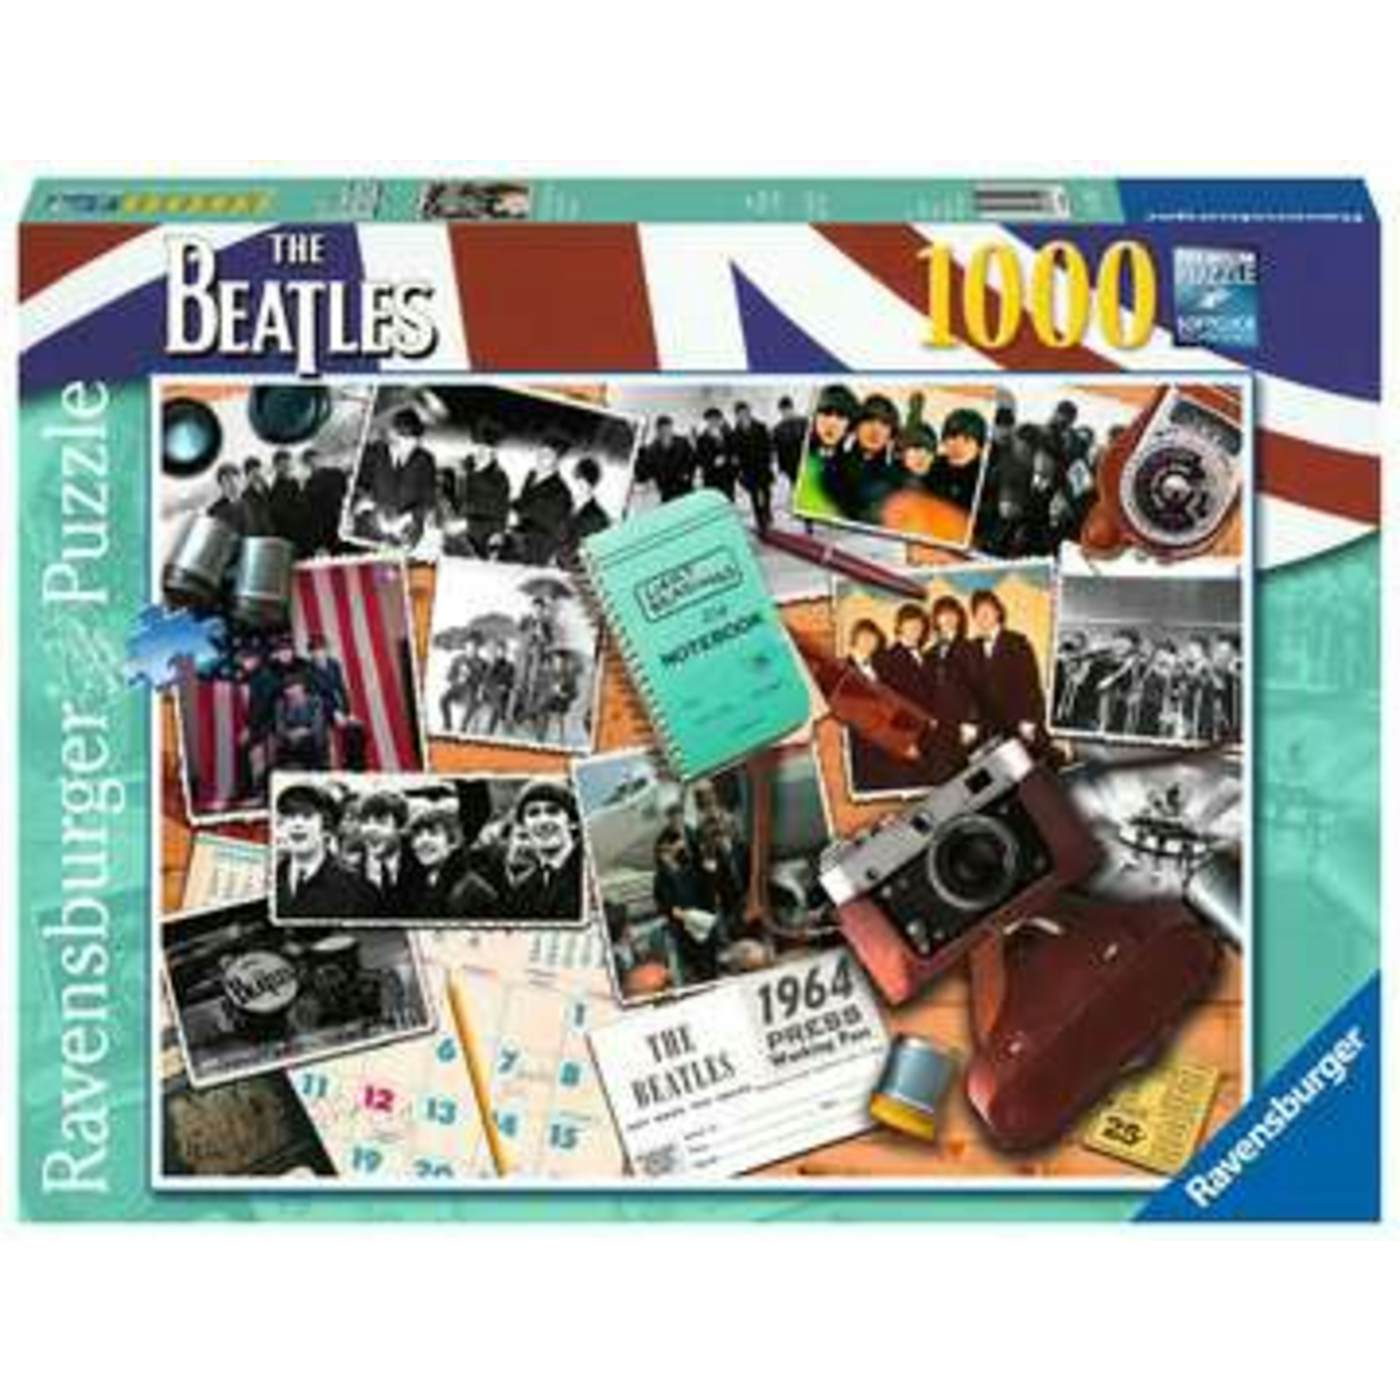 The Beatles 1964: A Photographer's View (1000 pc Puzzle)